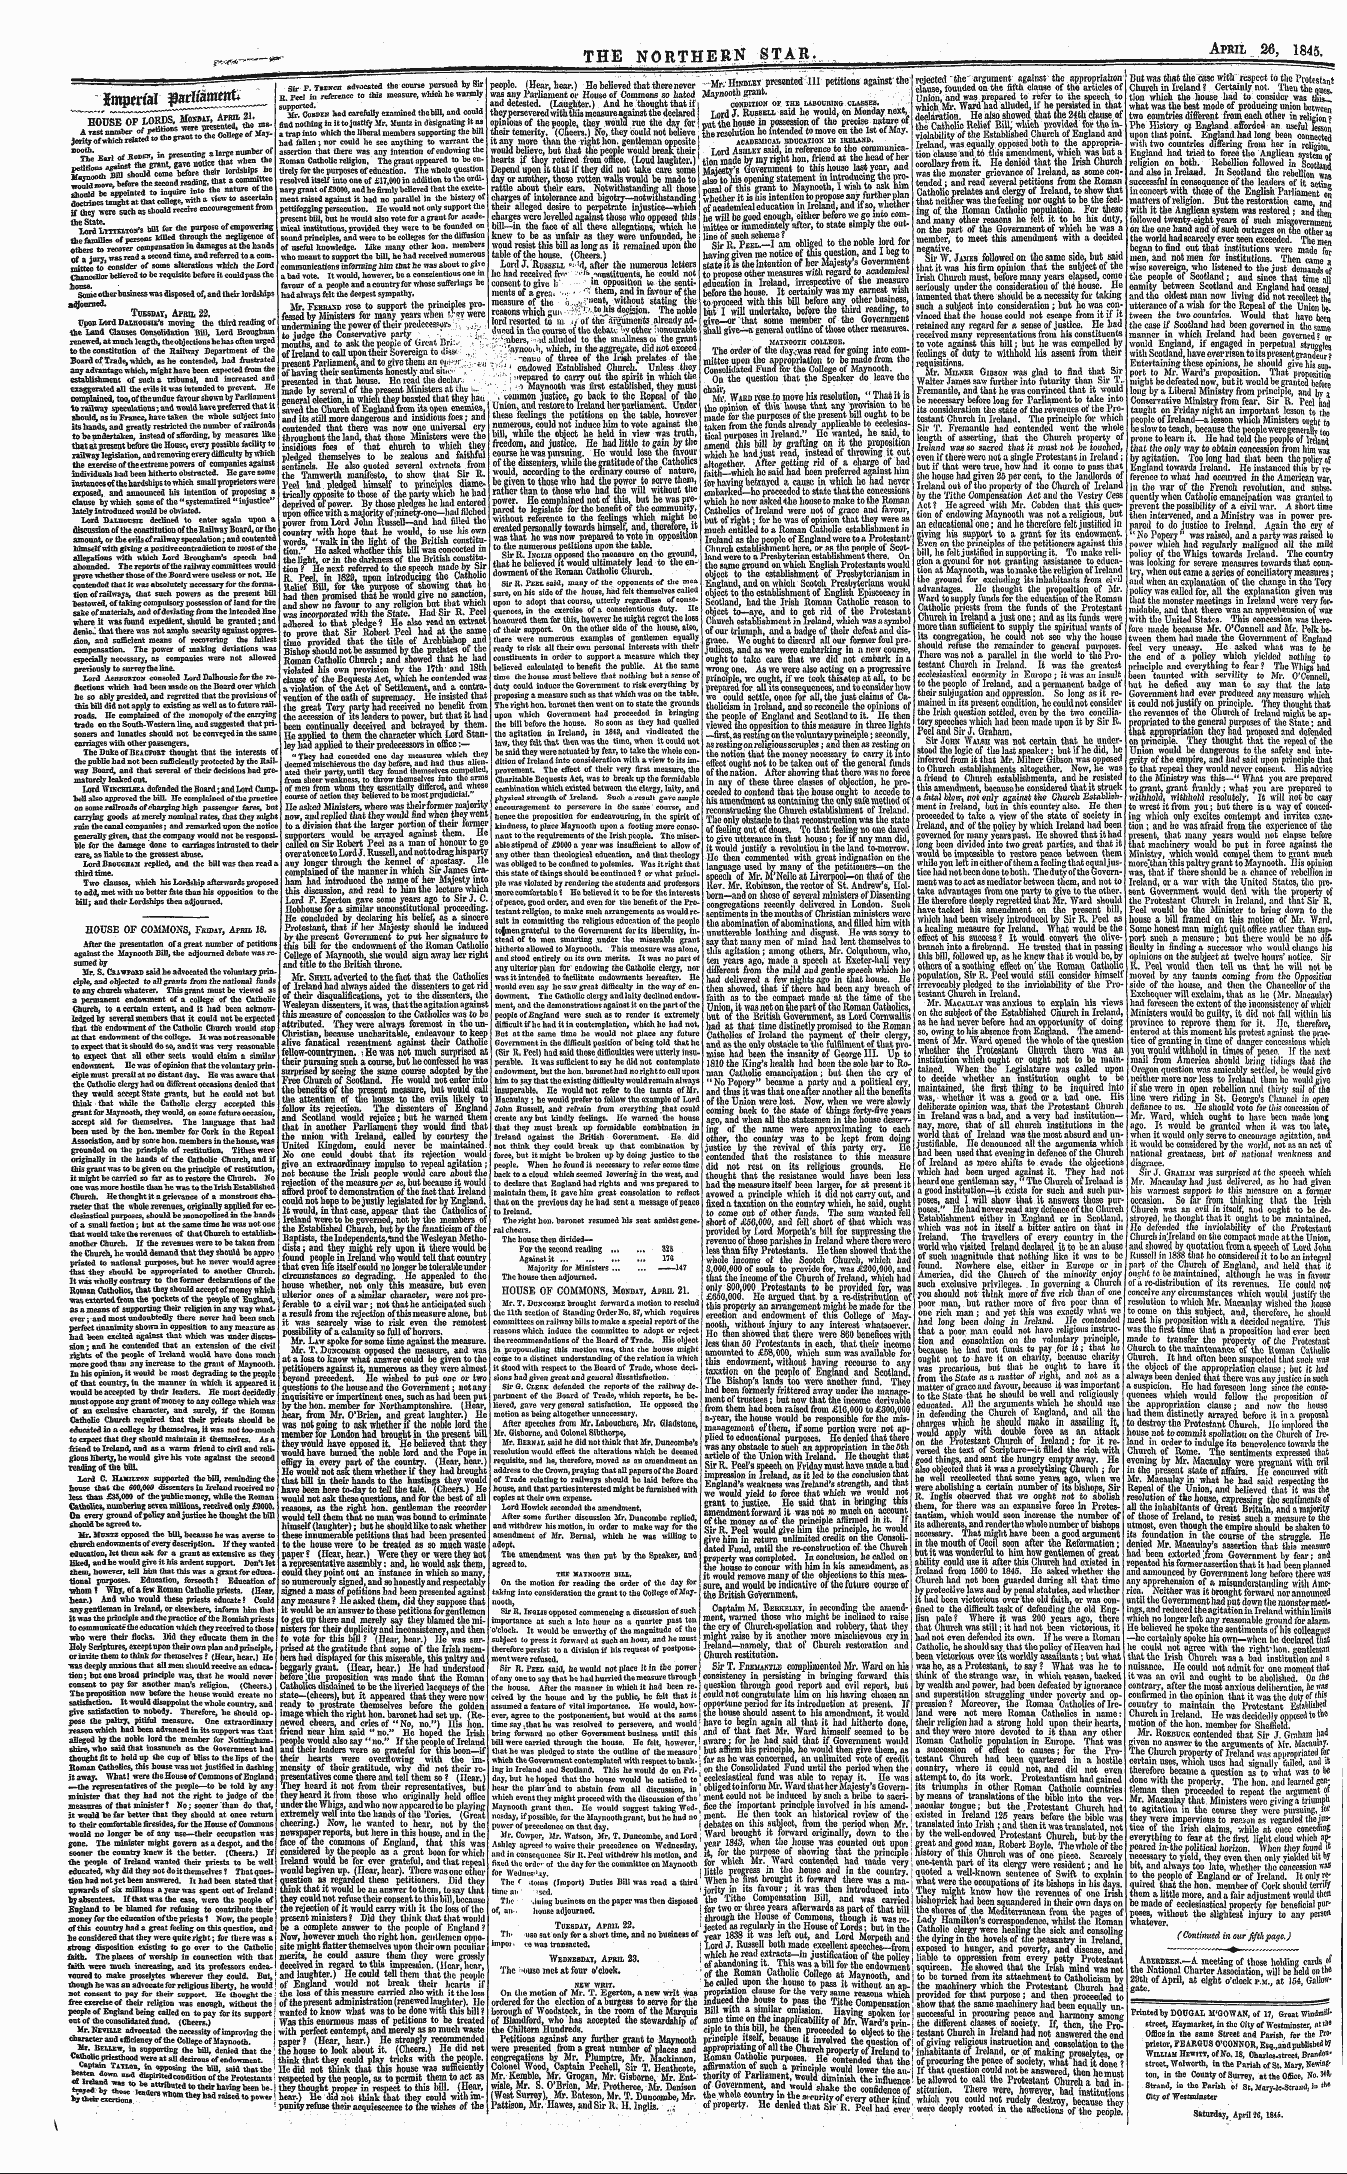 Northern Star (1837-1852): jS F Y, 3rd edition - Impm'al #Arltammt ^^